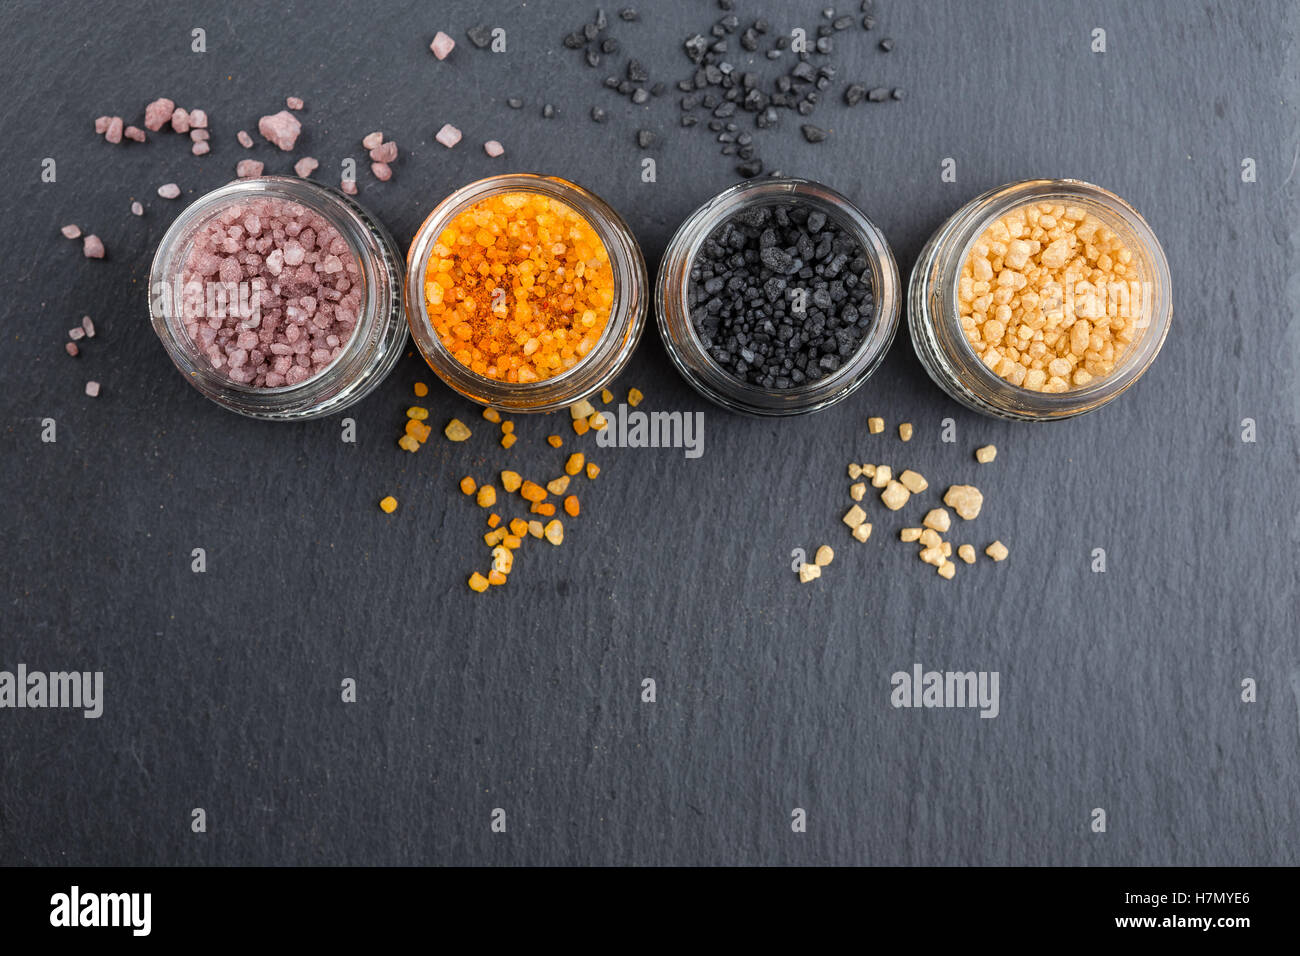 Close-up of salt grains Stock Photo - Alamy